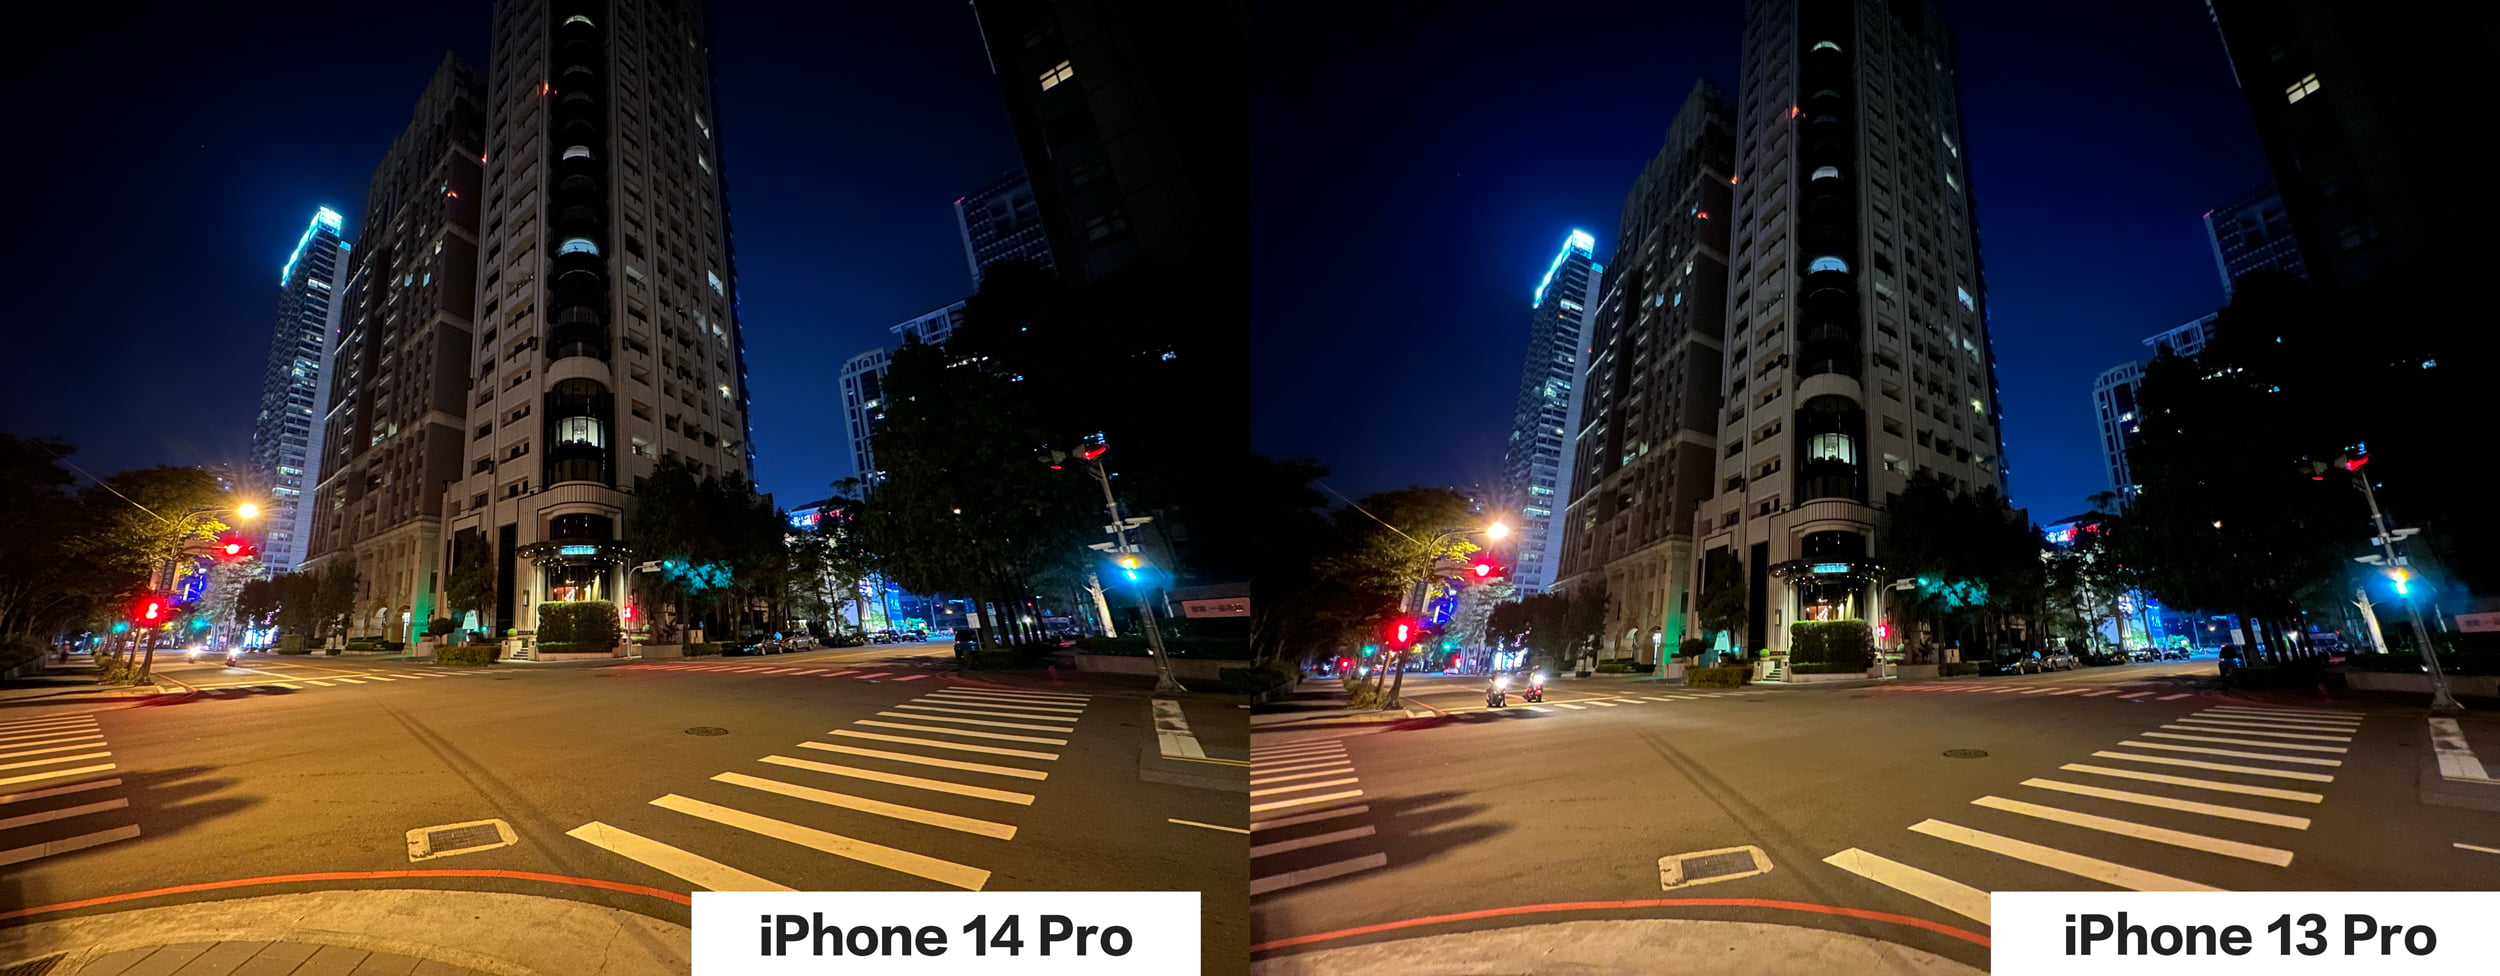 iphone 14 pro night shot comparison 13